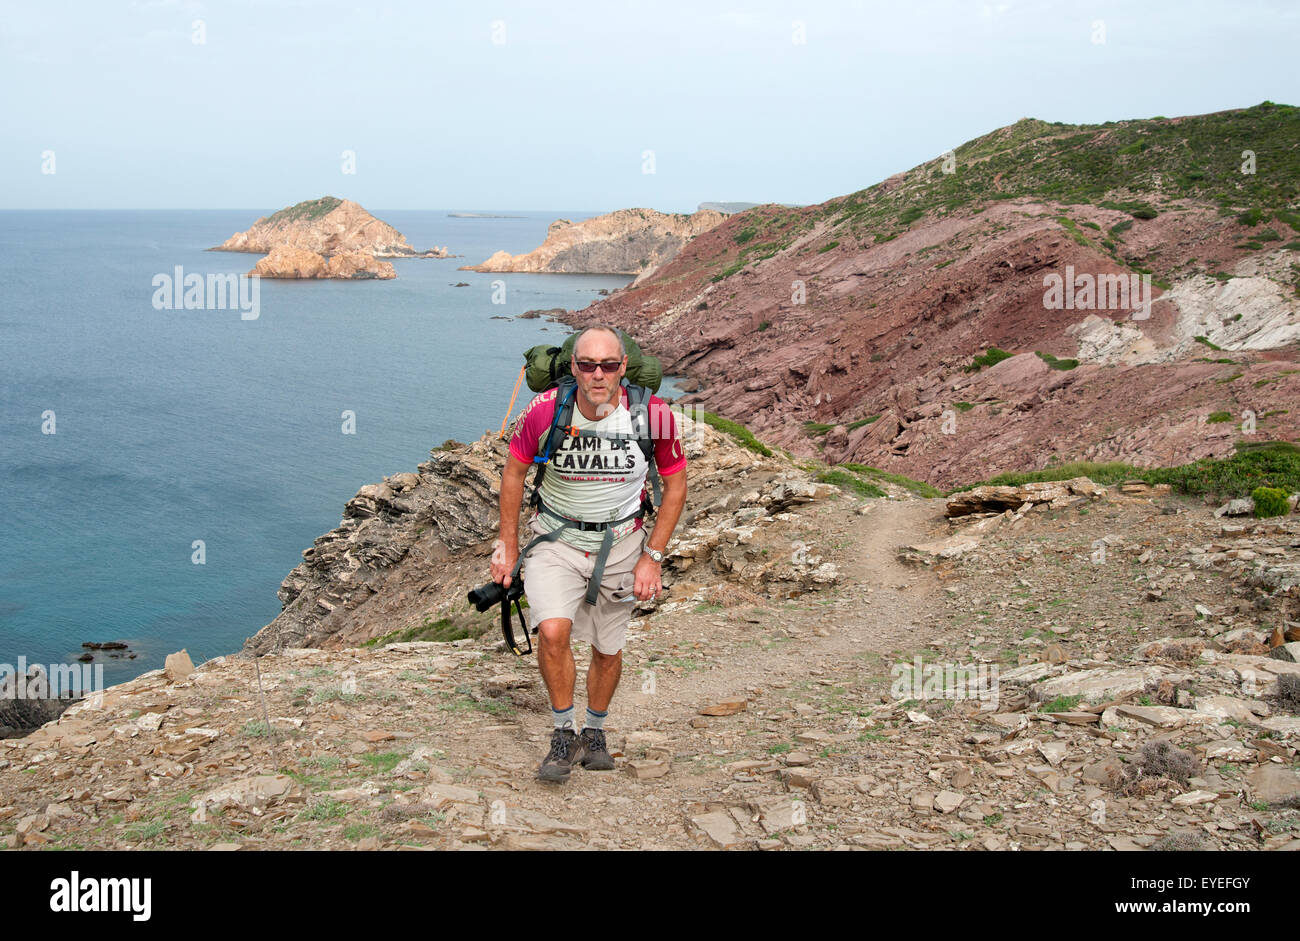 A hiker walks along a rocky northern coastal path of the Cami de Cavalls bridal trail on the island of Menorca Spain Stock Photo